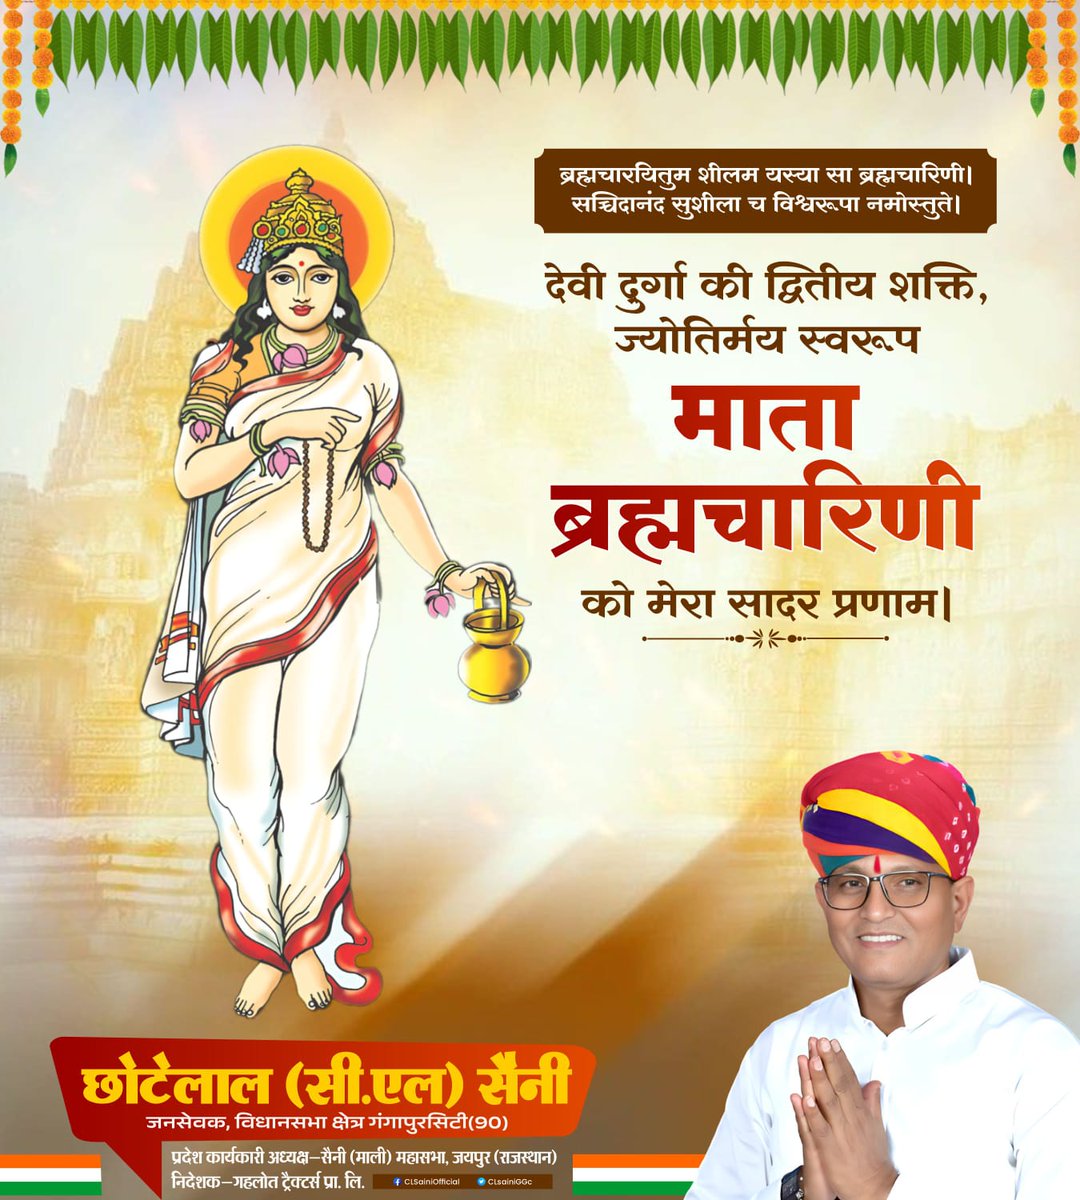 देवी दुर्गा की द्वितीय शक्ति, ज्योतिर्मय स्वरूप माता ब्रह्मचारिणी को मेरा सादर प्रणाम ।

#Rajasthan #Gangapurcity #MeraParivarGangapurcity  #छोटेलाल_सैनी_सीएल_सैनी #सीएल_सैनी